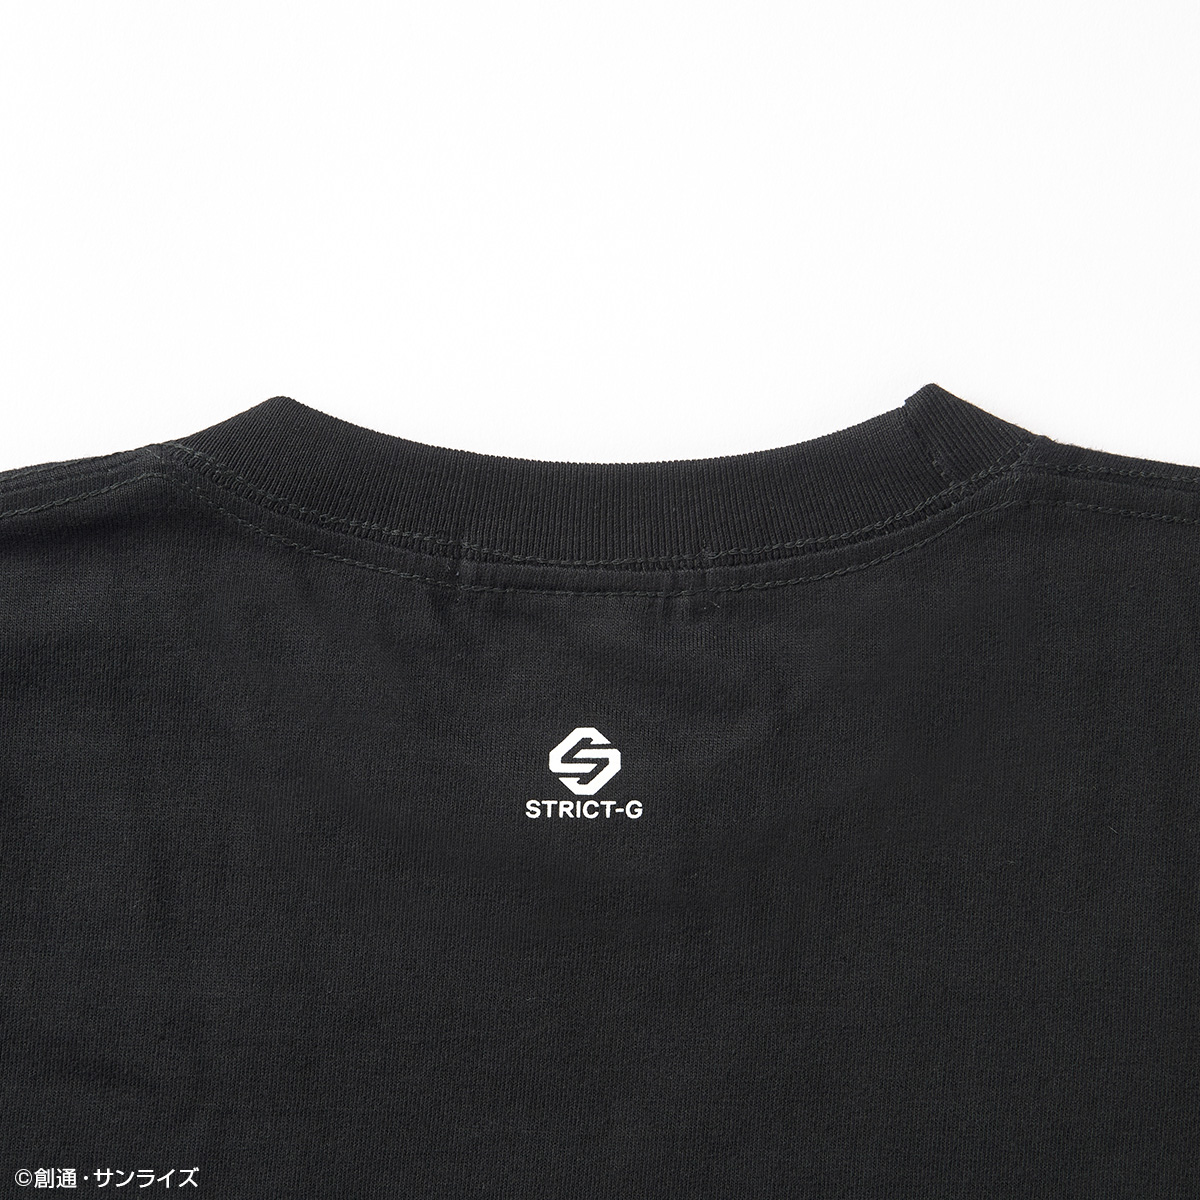 STRICT-G『機動戦士ガンダム』Tシャツコレクション CHAR AZNABLE 005